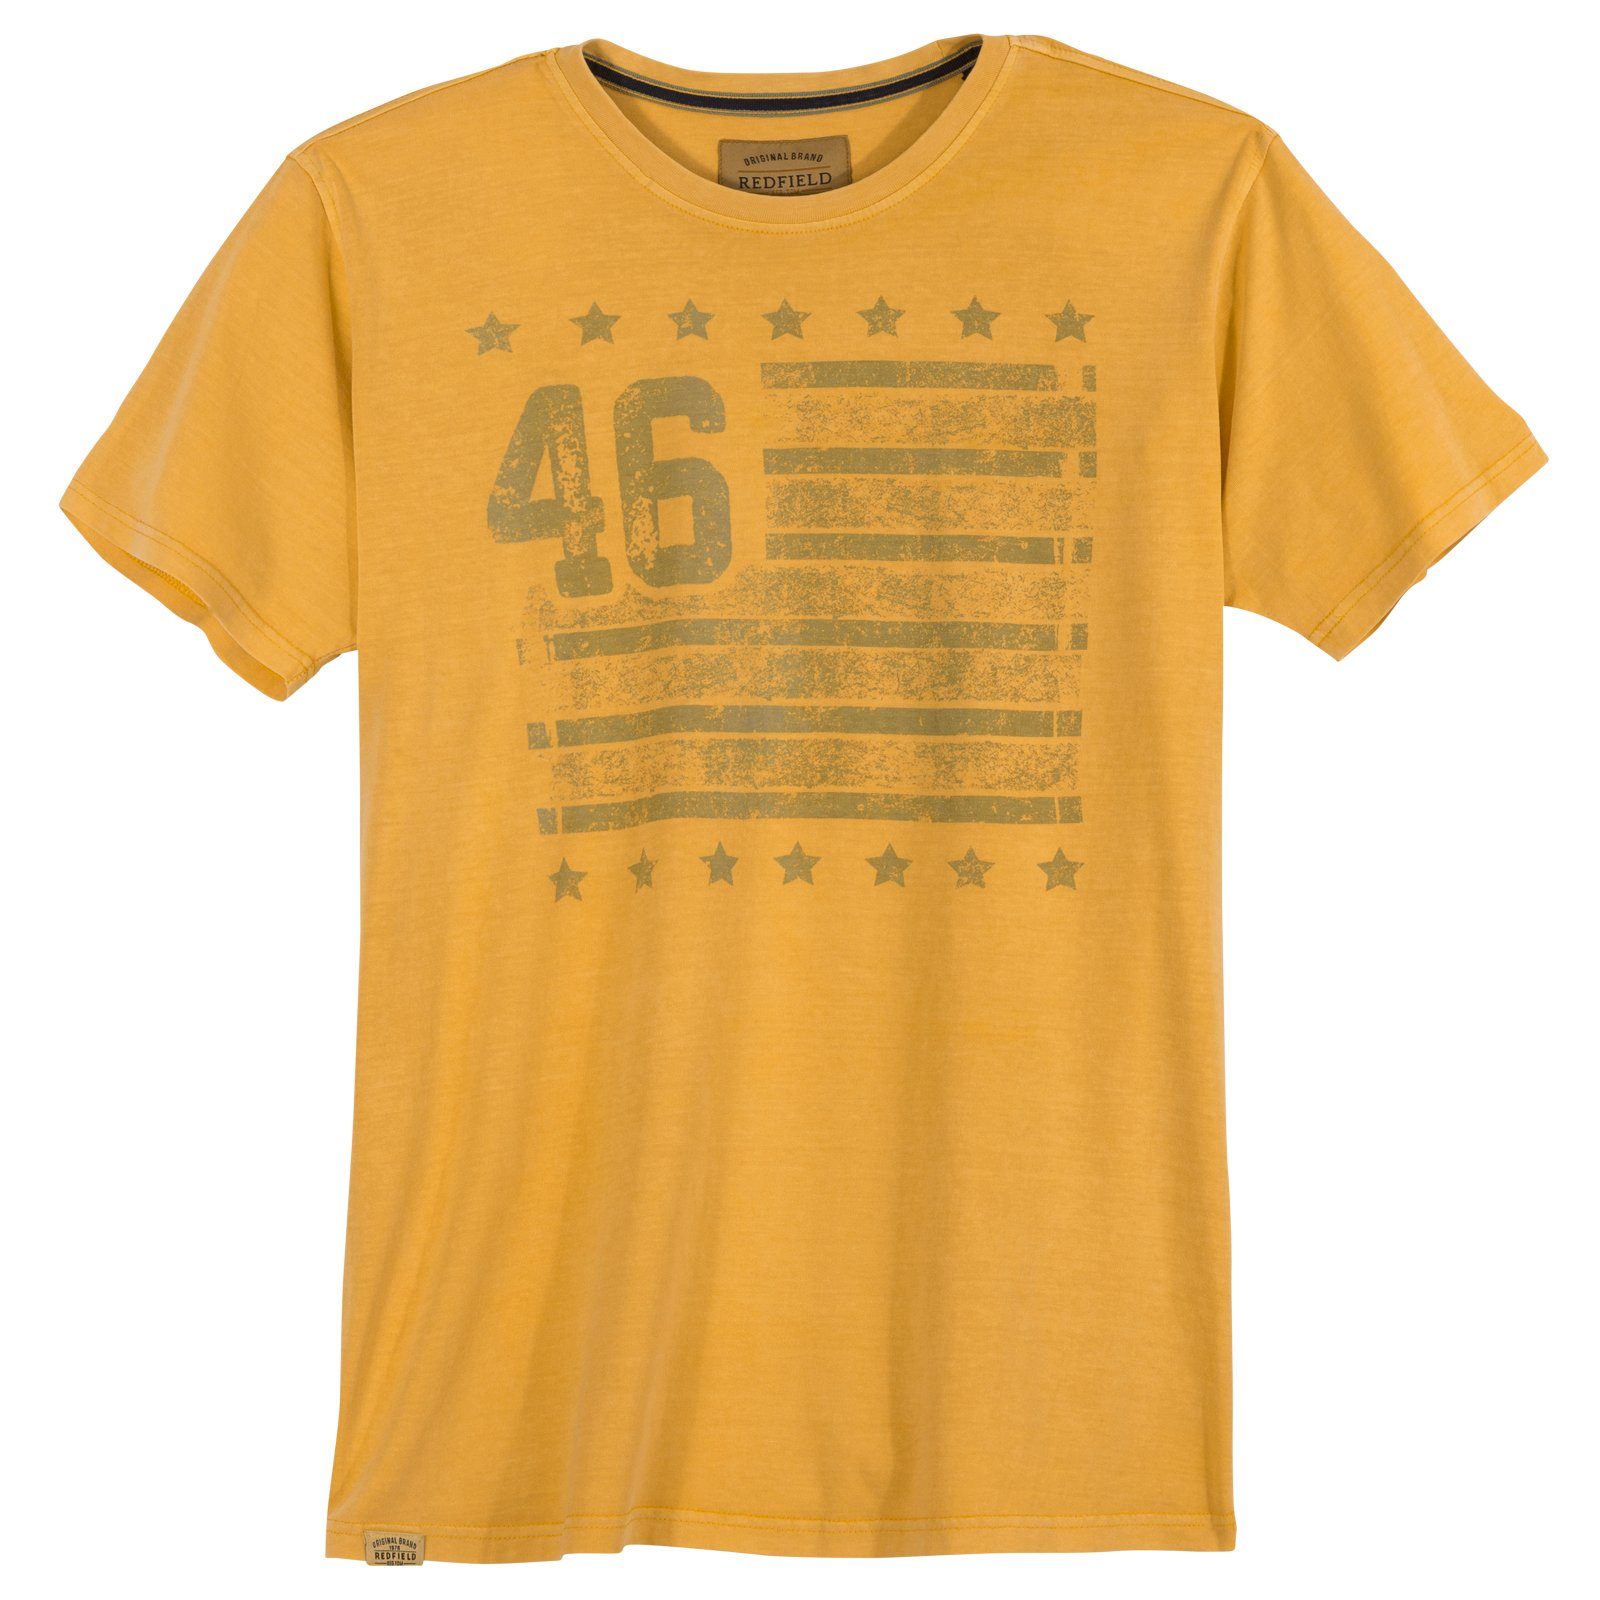 Größen honiggelb Große Used-Look redfield Flaggen-Print Redfield Print-Shirt T-Shirt